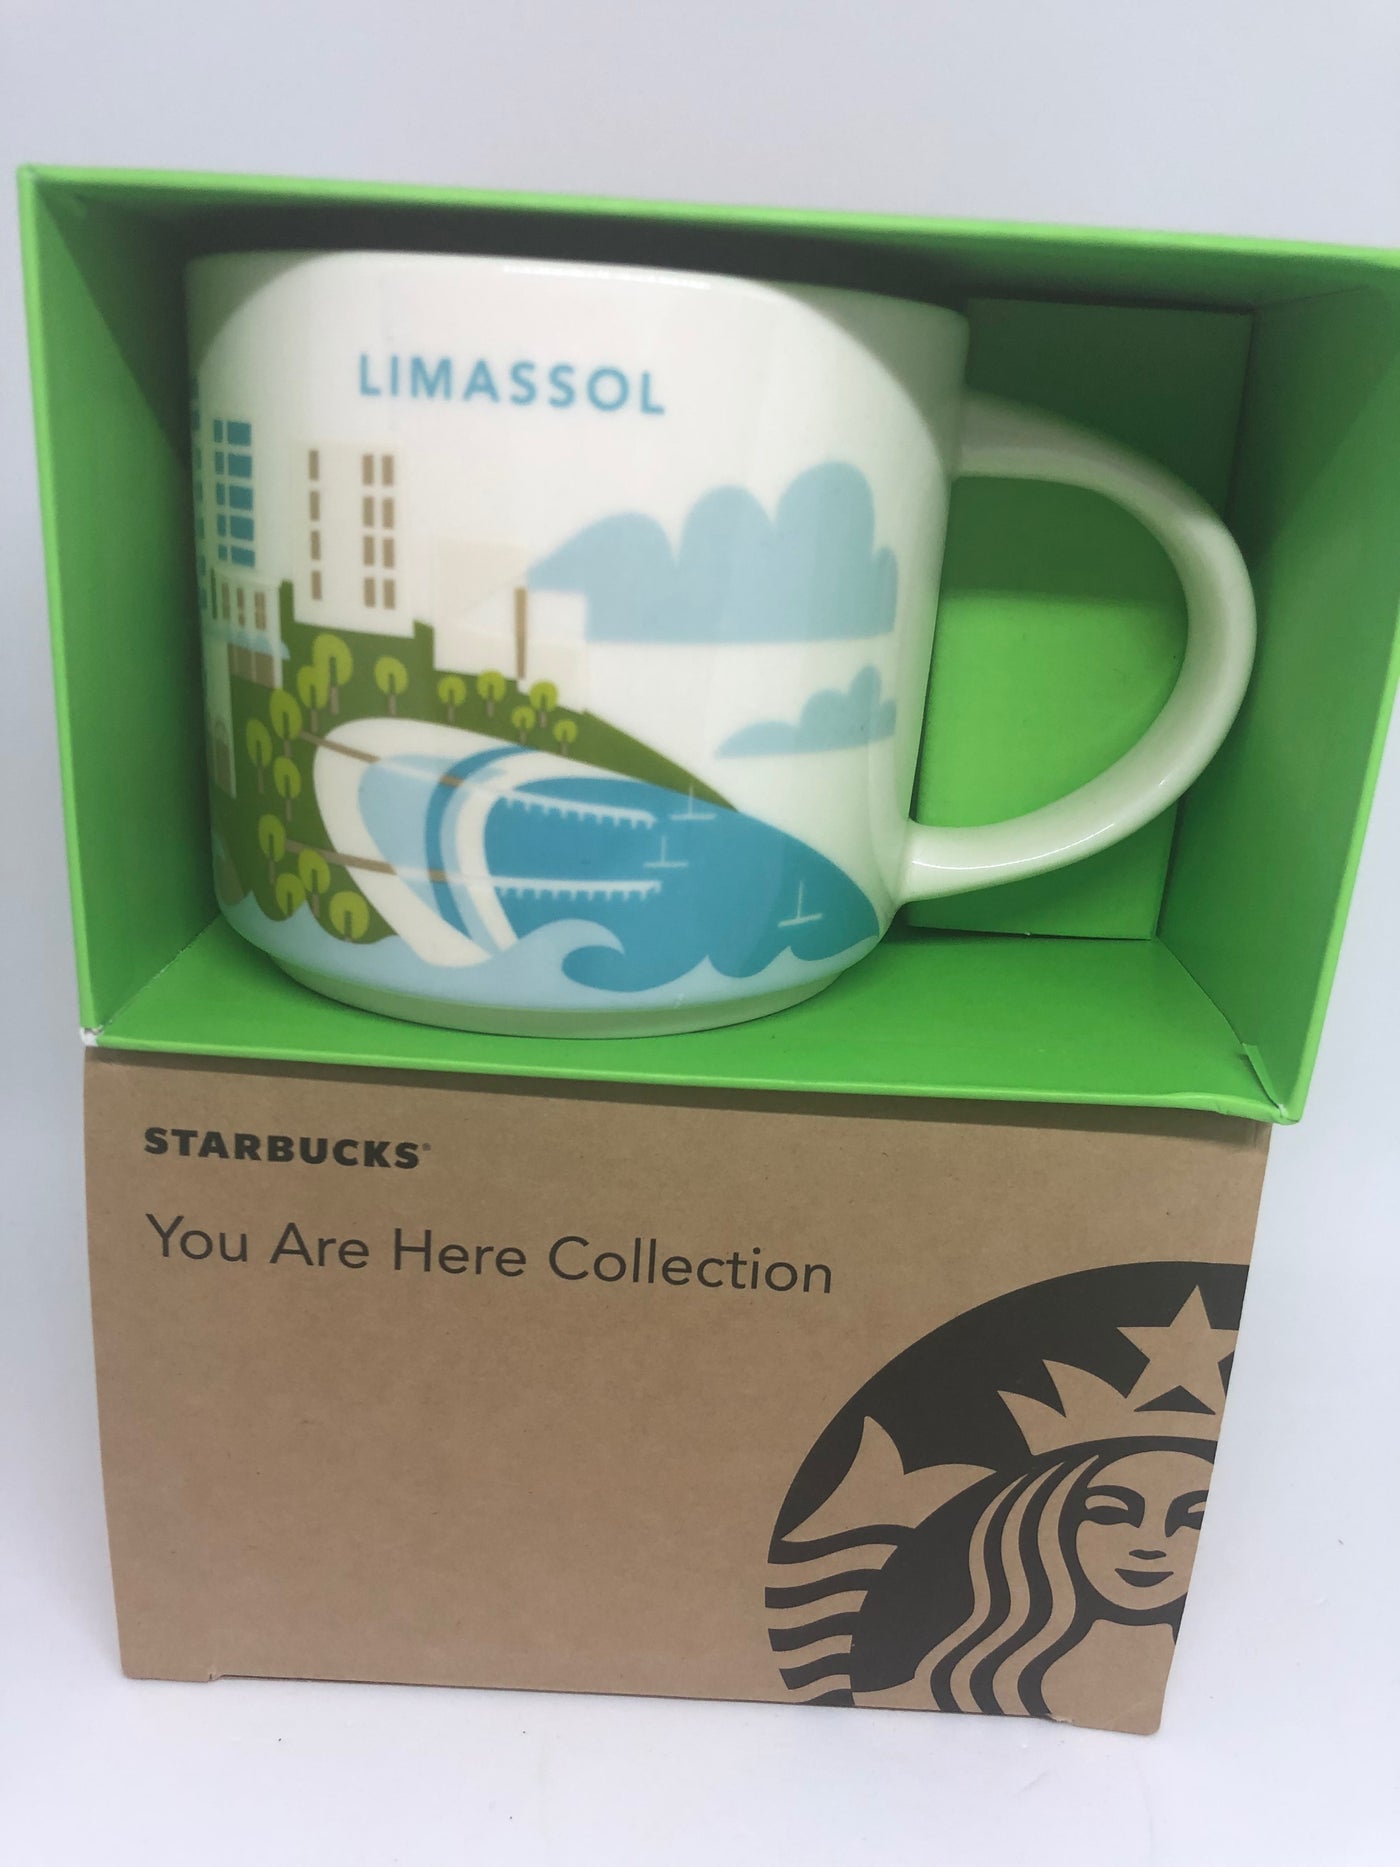 Starbucks You Are Here Cyprus Limassol Ceramic Coffee Mug New with Box